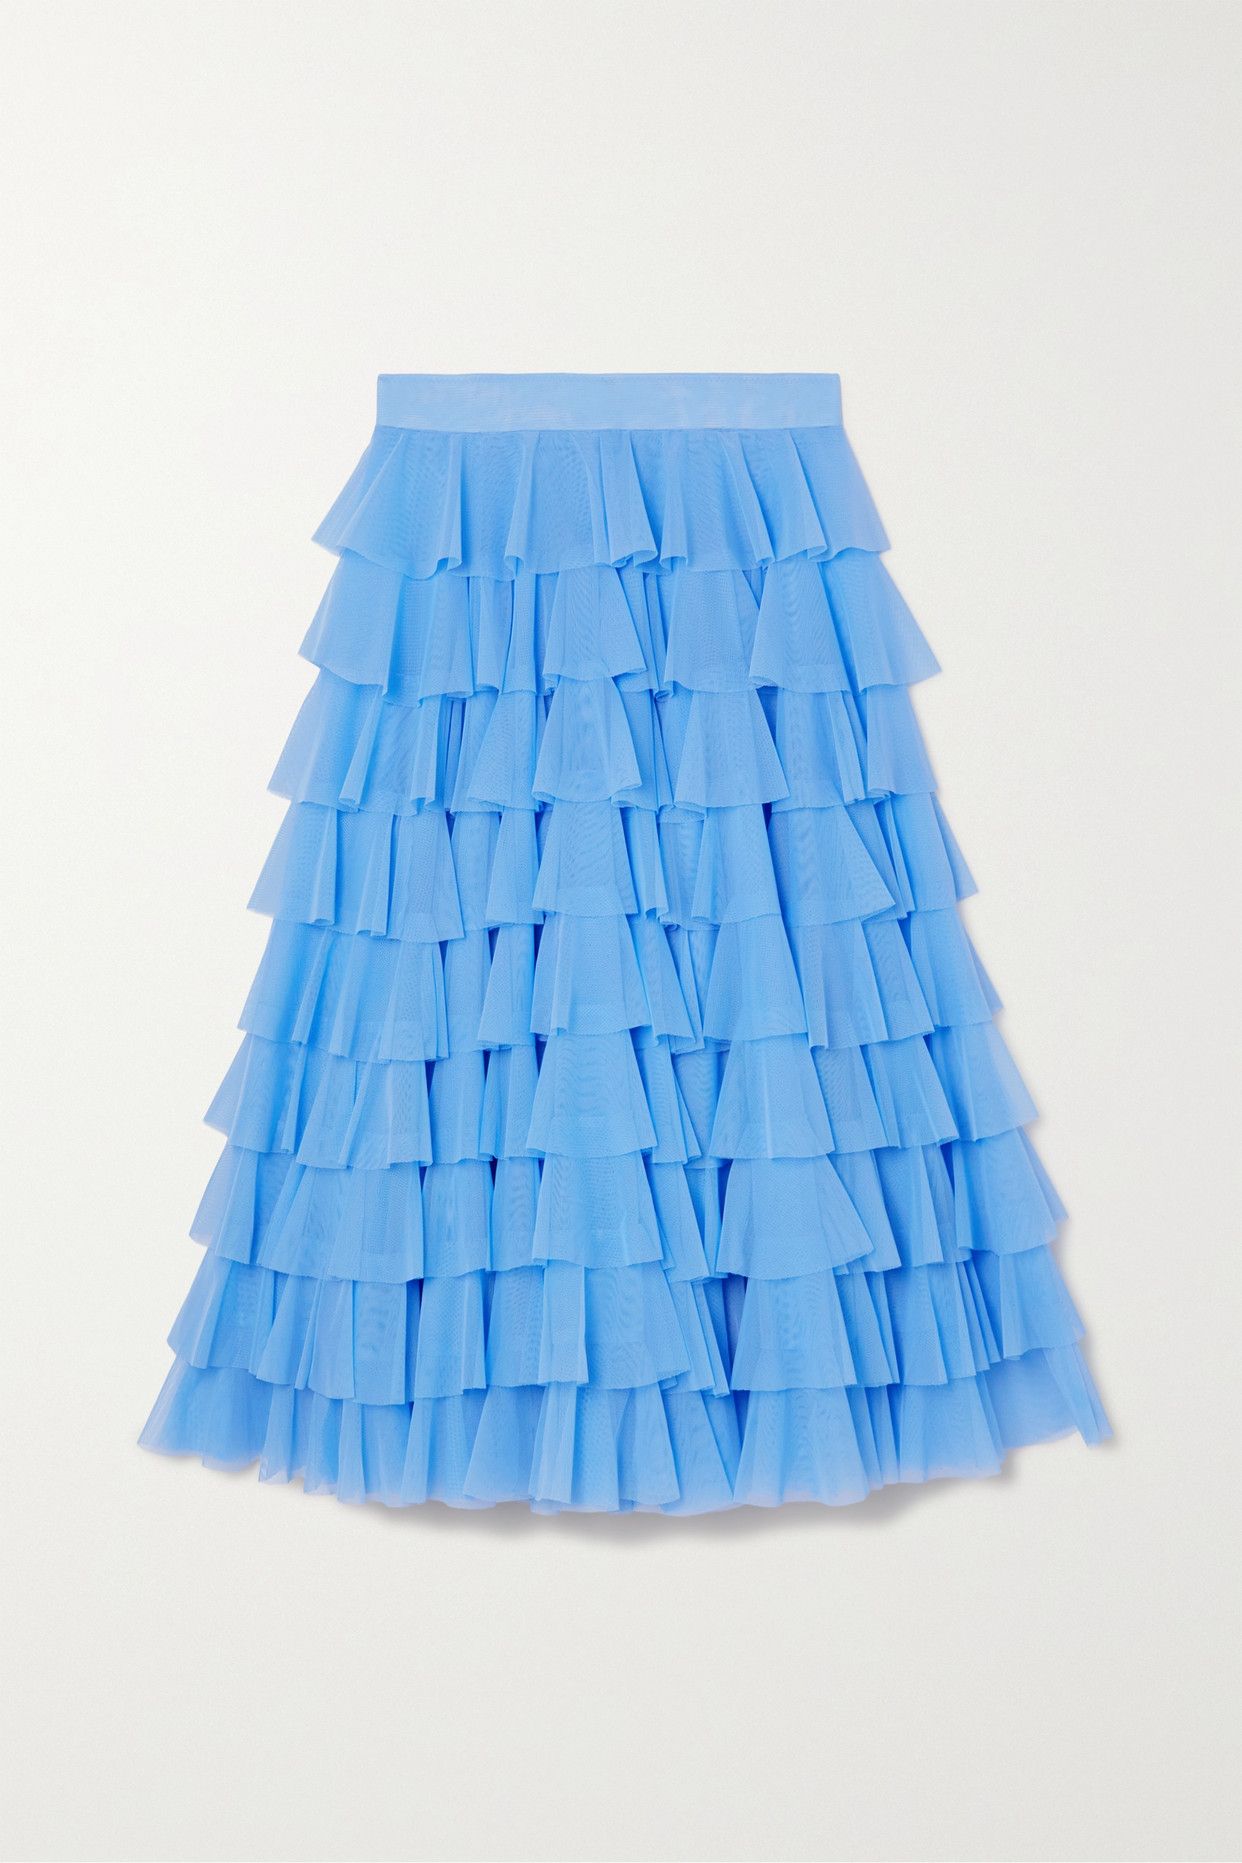 Norma Kamali Ruffled Tiered Tulle Midi Skirt in Blue | Stylemi